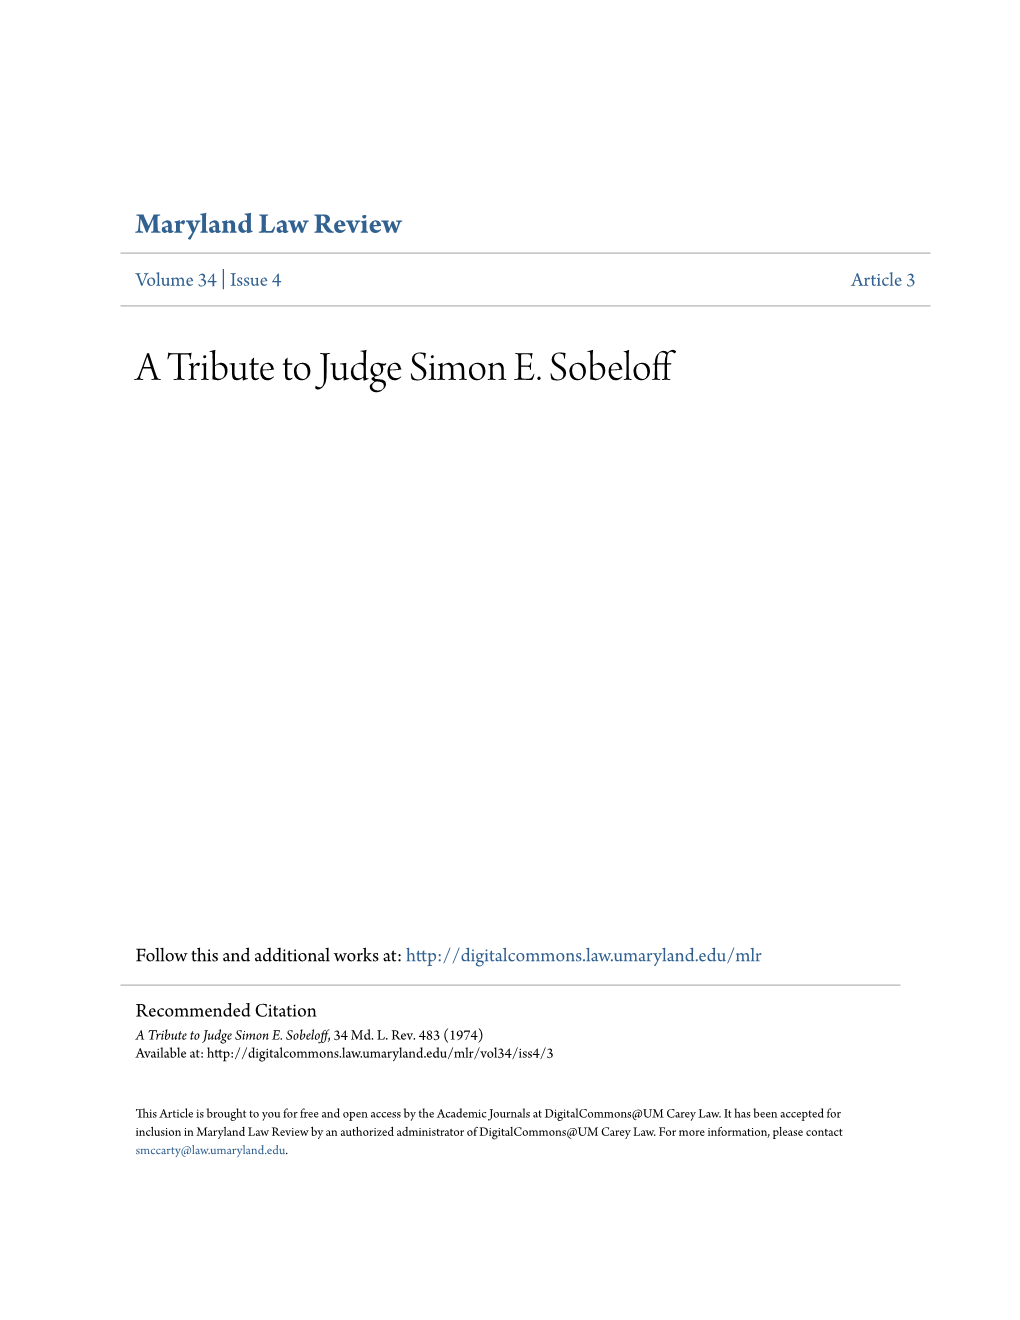 A Tribute to Judge Simon E. Sobeloff